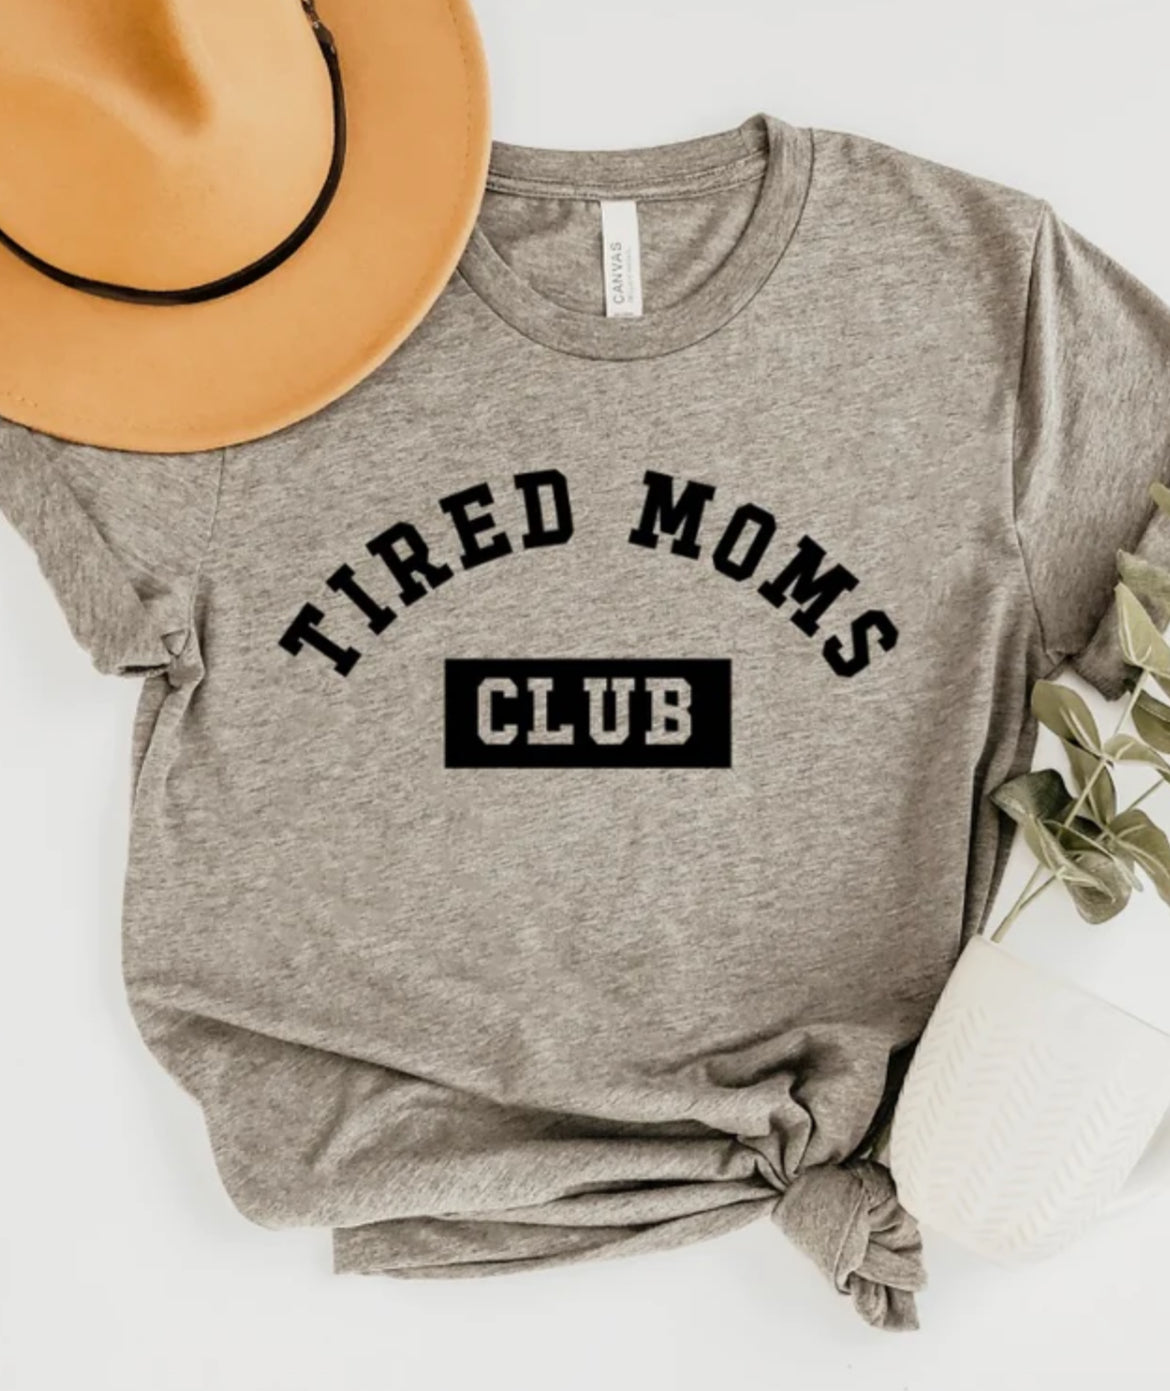 Tired Moms Club_Black ink transfer